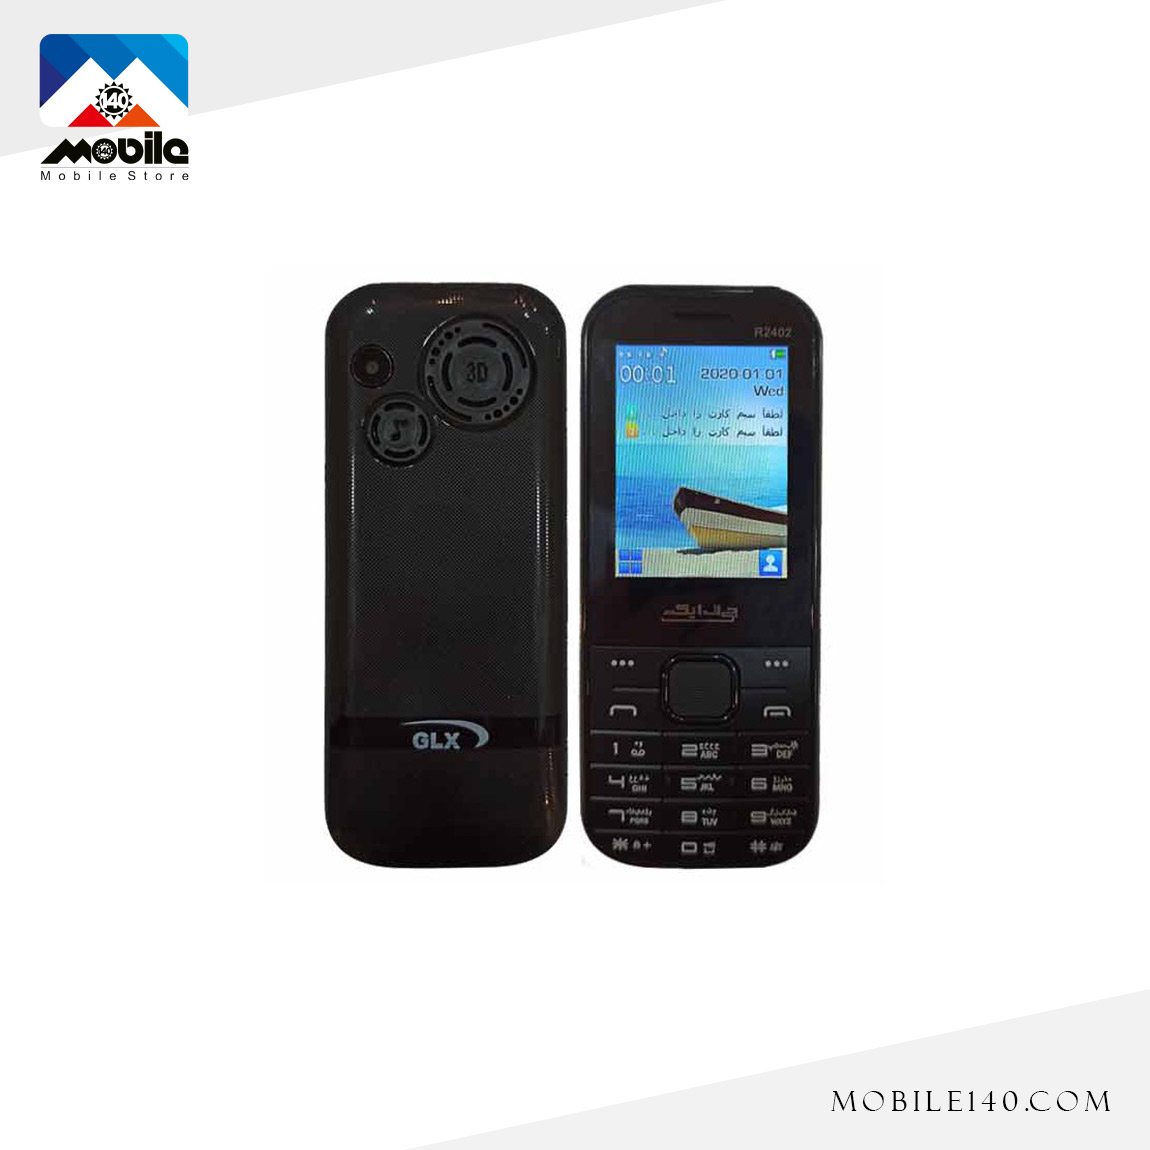 GLX R2402 Mobile Phone 2